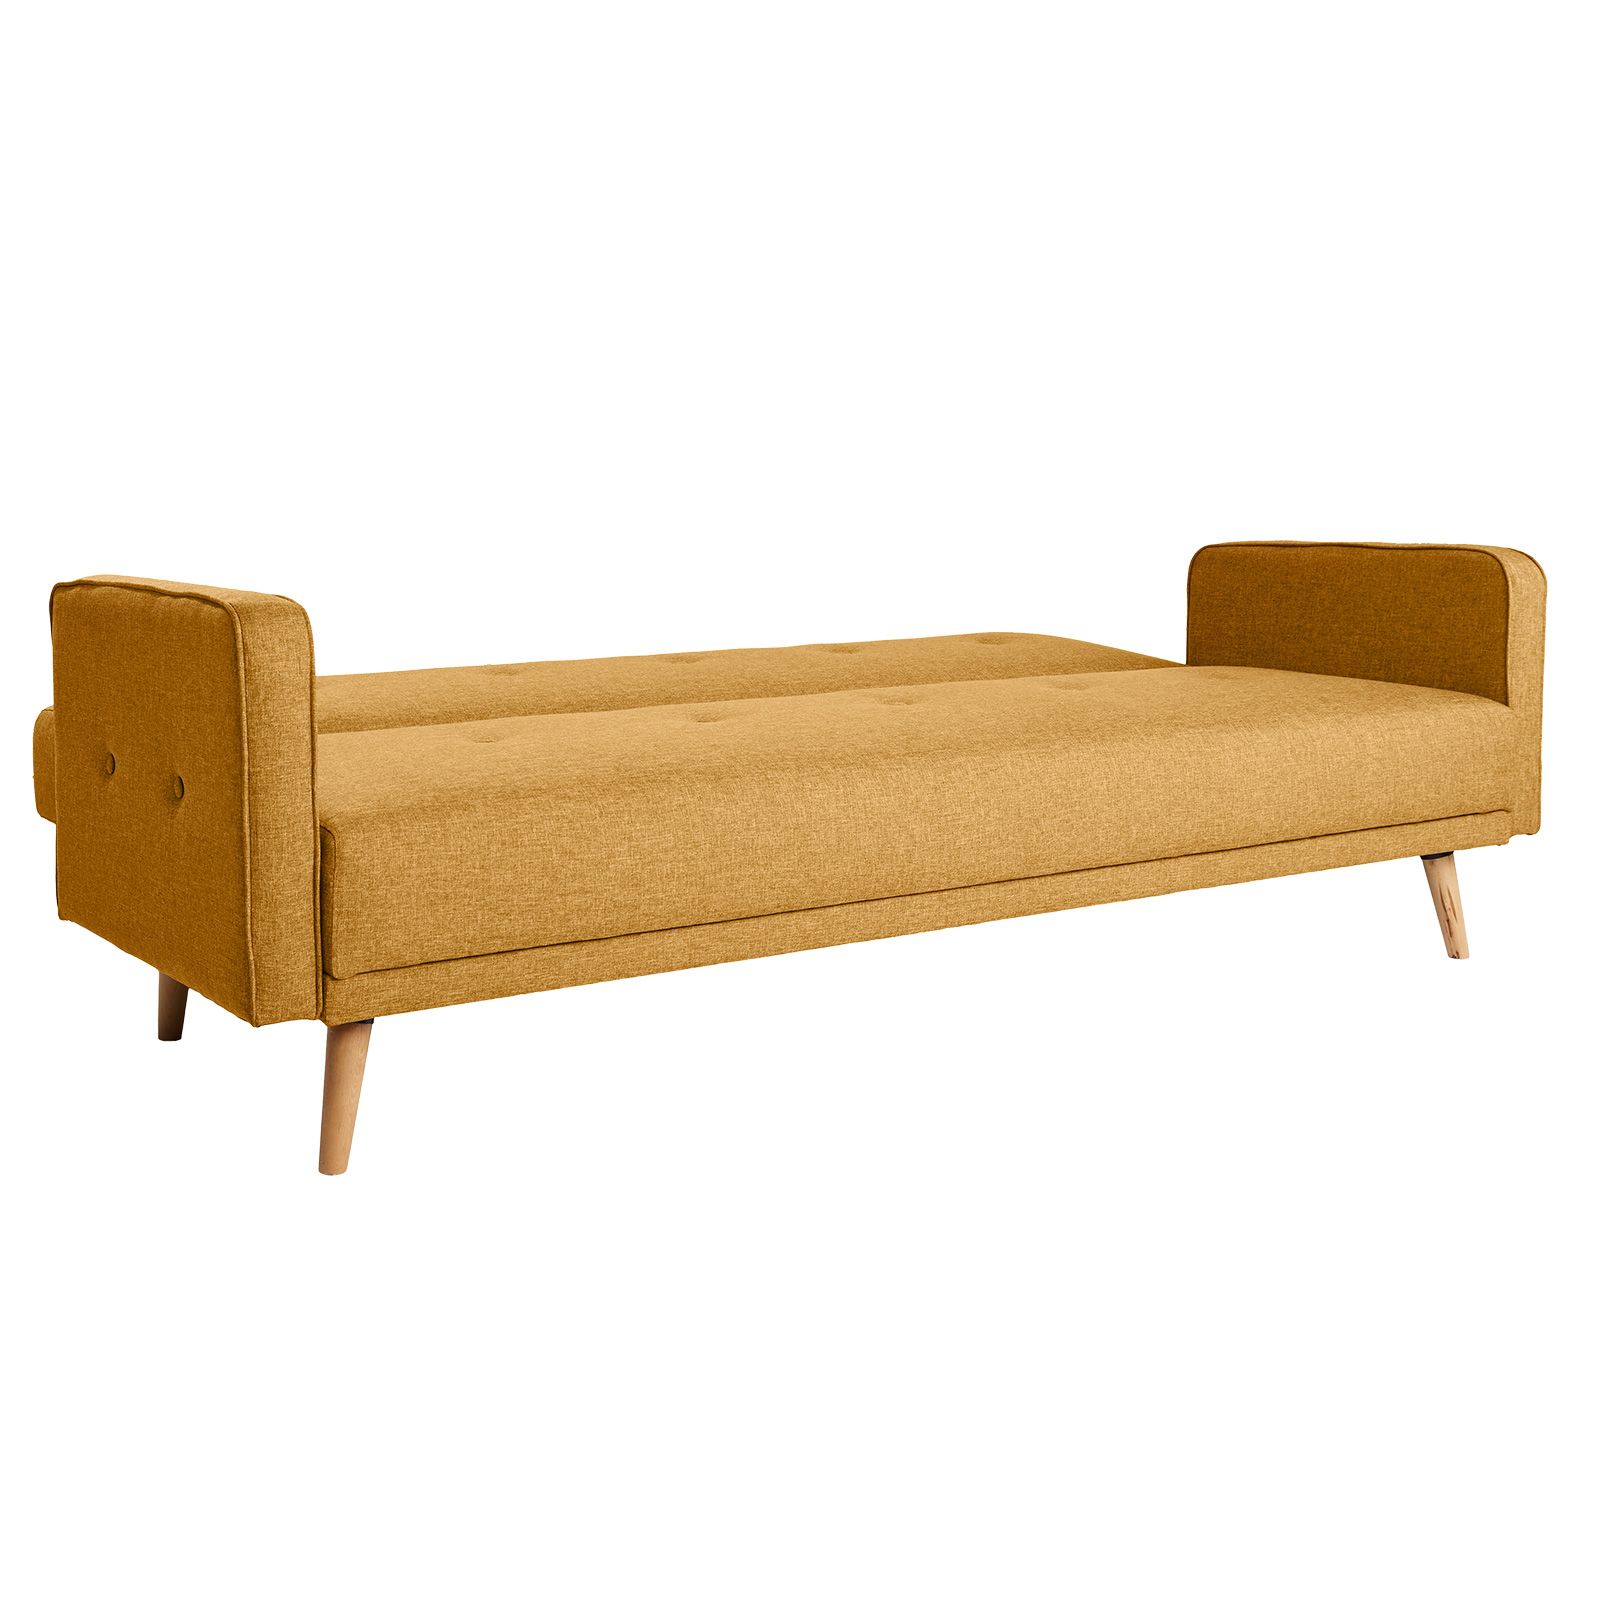 HAMILGON | Sofá cama con brazos tapizado en mostaza (208 x 86 x 81cm)